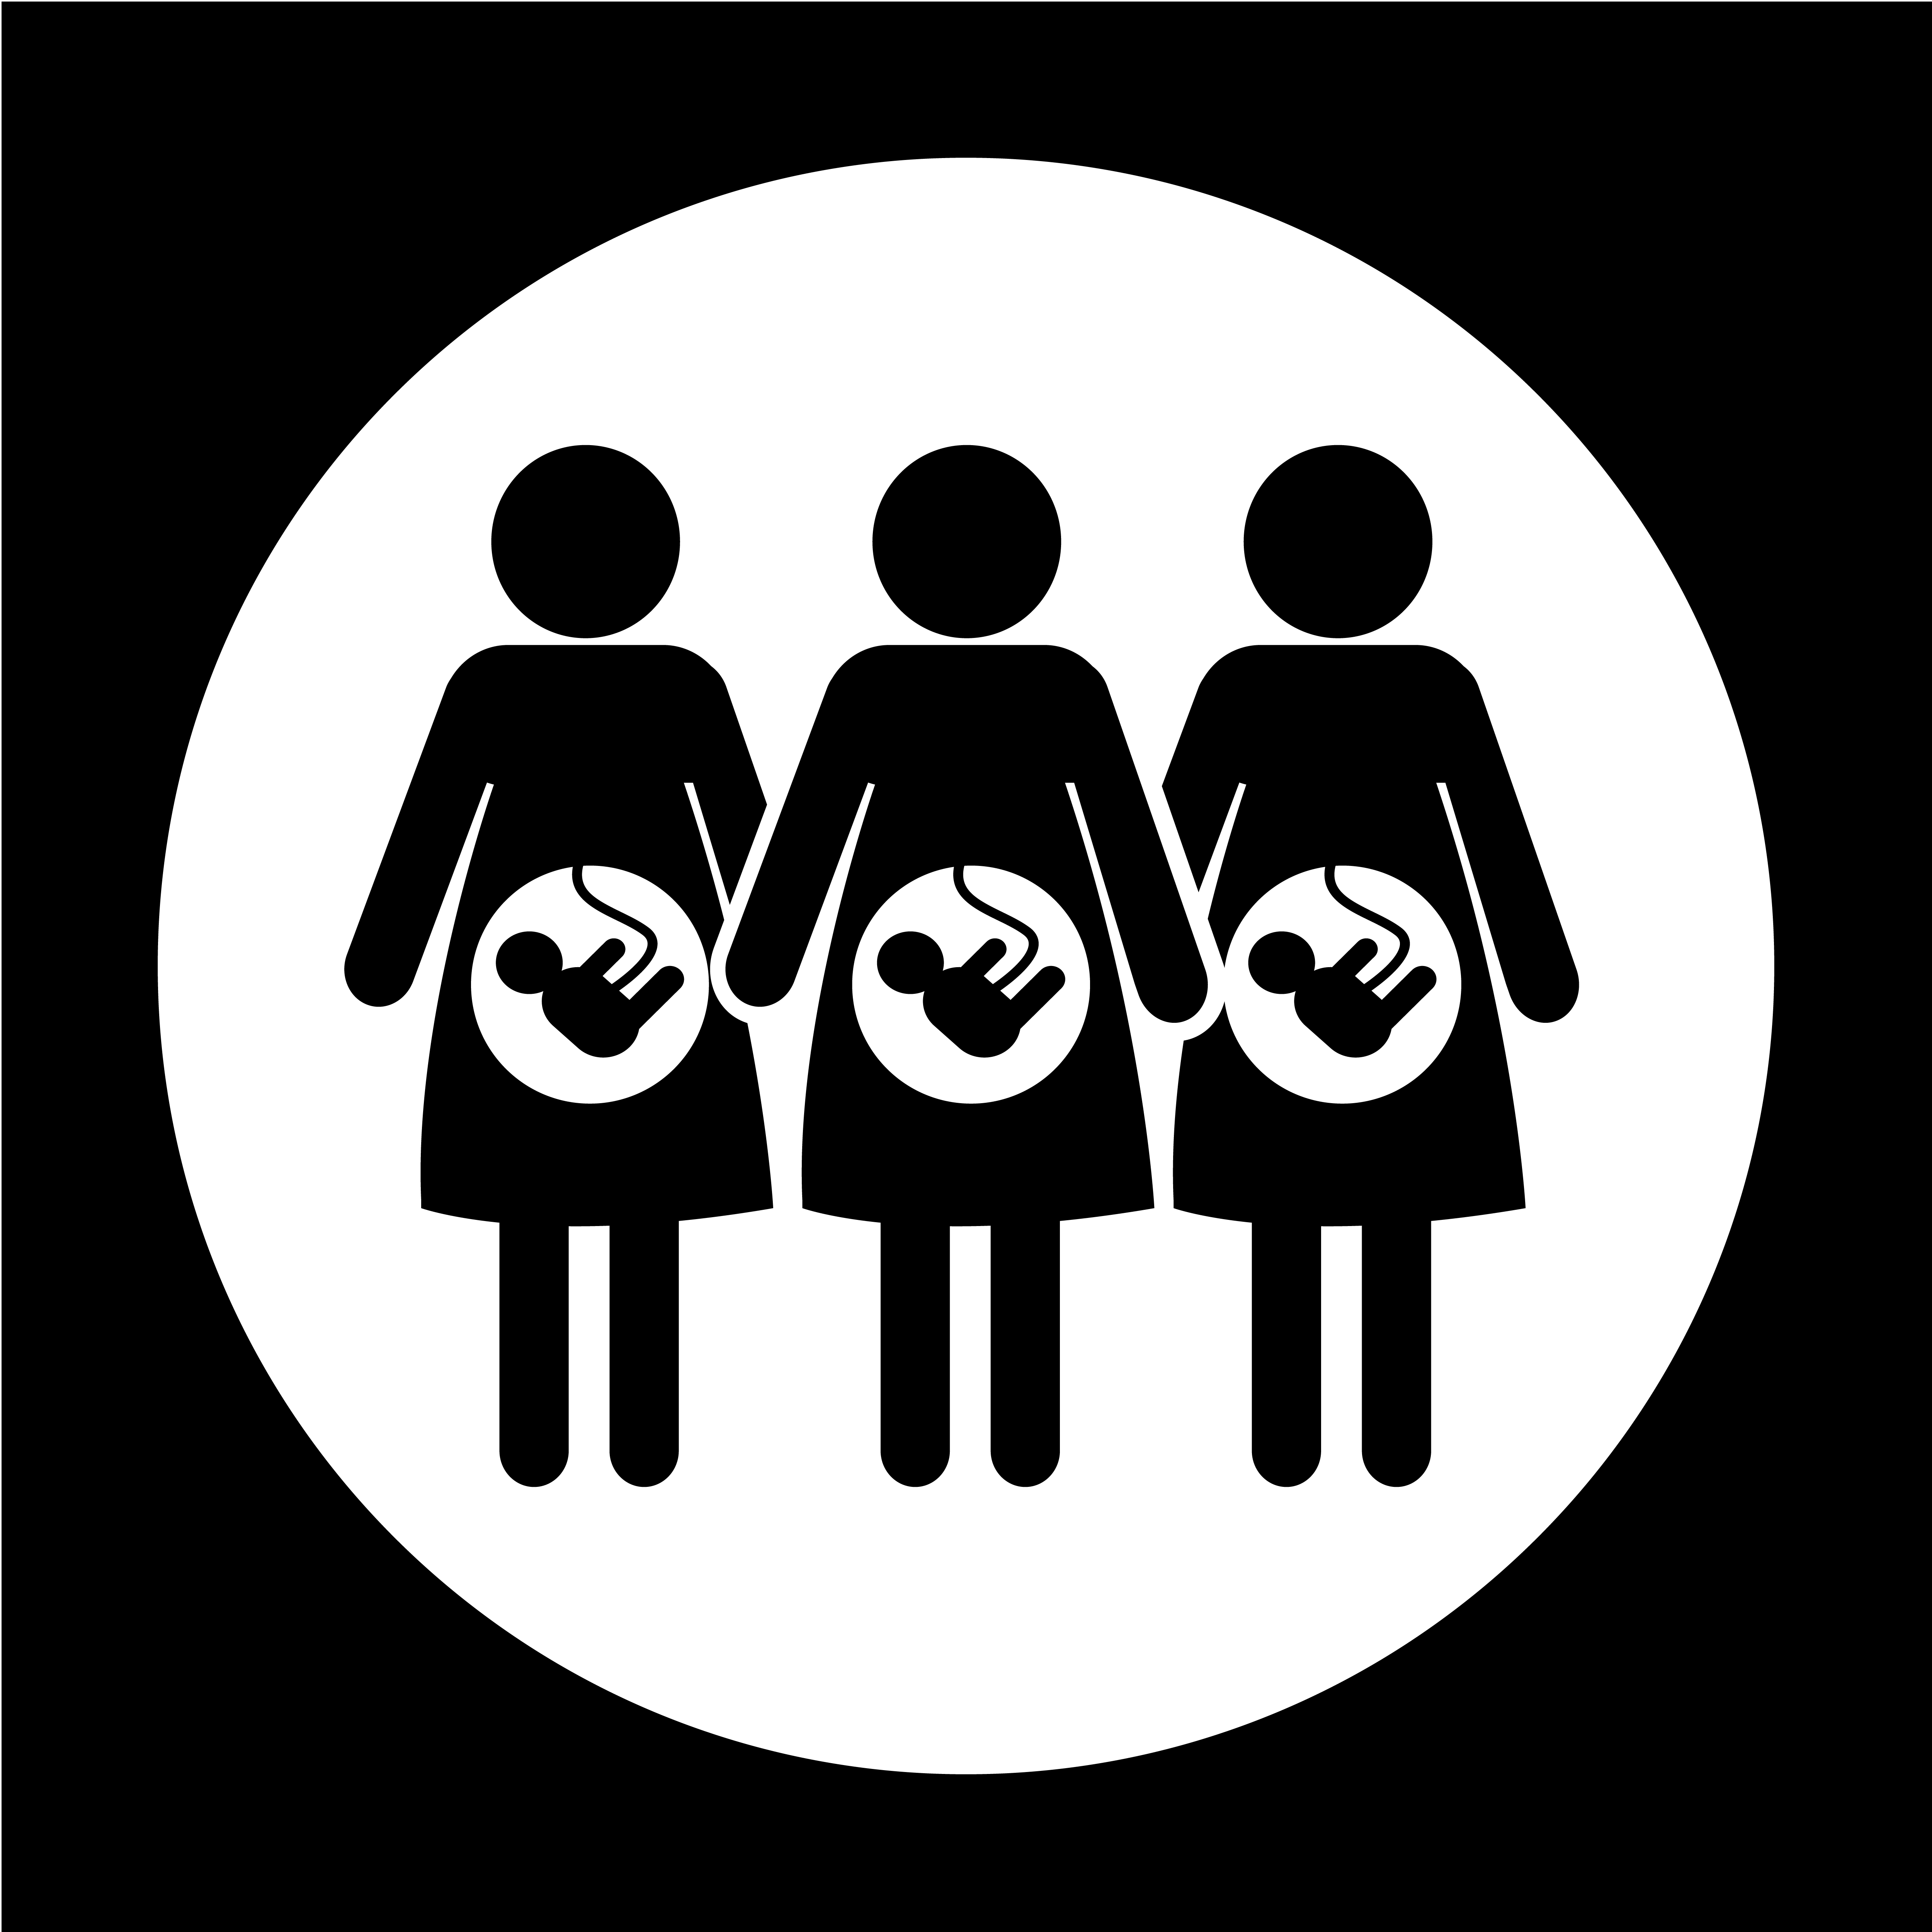 Download Pregnant woman icon - Download Free Vectors, Clipart Graphics & Vector Art